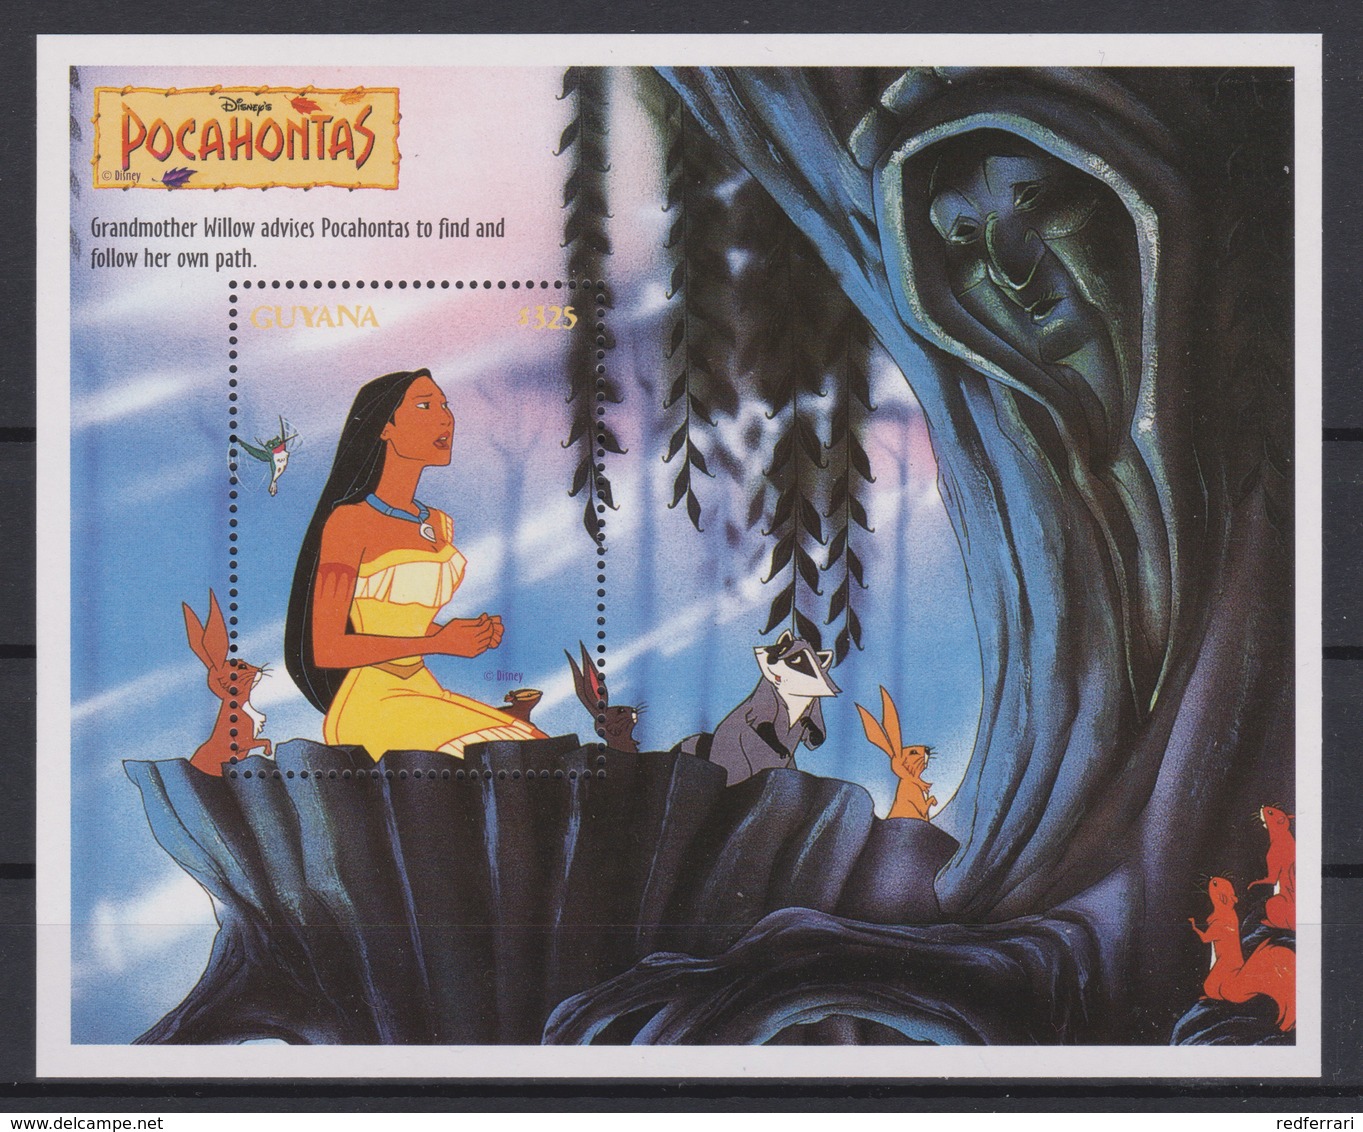 2328  WALT DISNEY - GUYANA ( POCAHONTAS) Presentation Of The Cartoon Characters -Grandmother Willow Advises Pocahontas - Disney